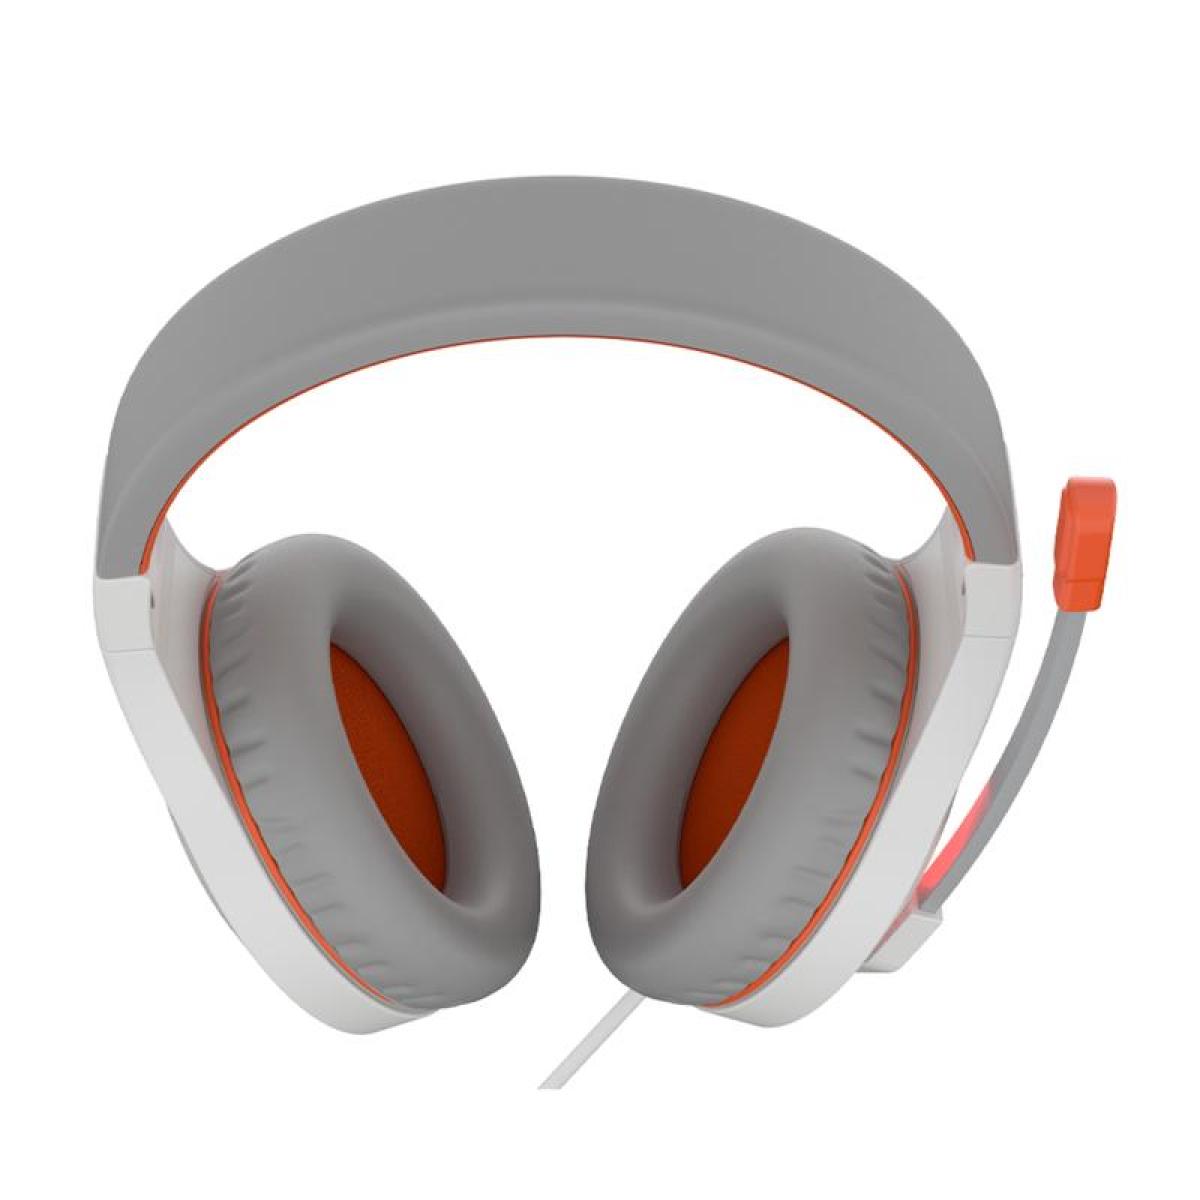 MeeTion Stereo Gaming Headphones